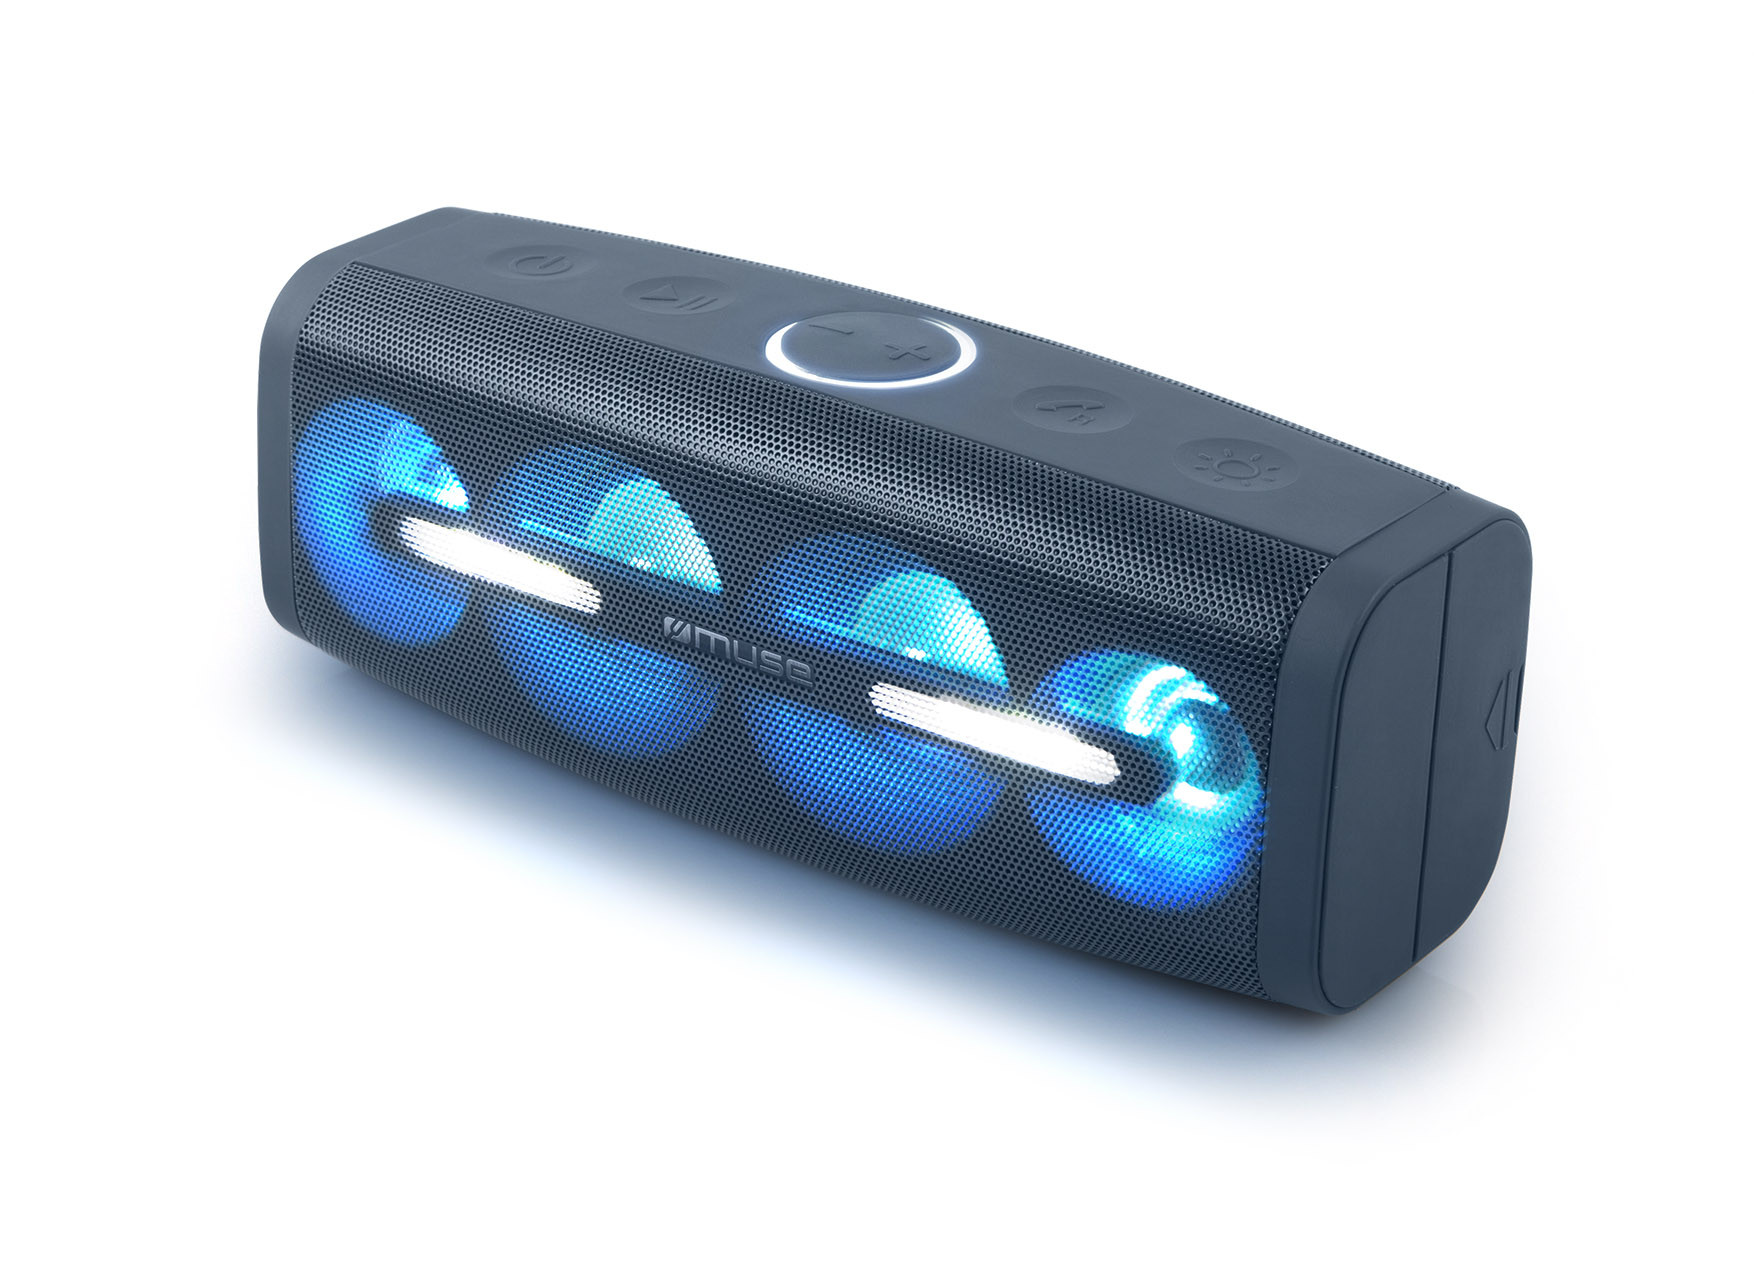 ENCEINTE PORTABLE USB MP3 150W PARTY BOX BLUETOOTH AVEC BATTERIE LED RGB +  MICRO FILAIRE